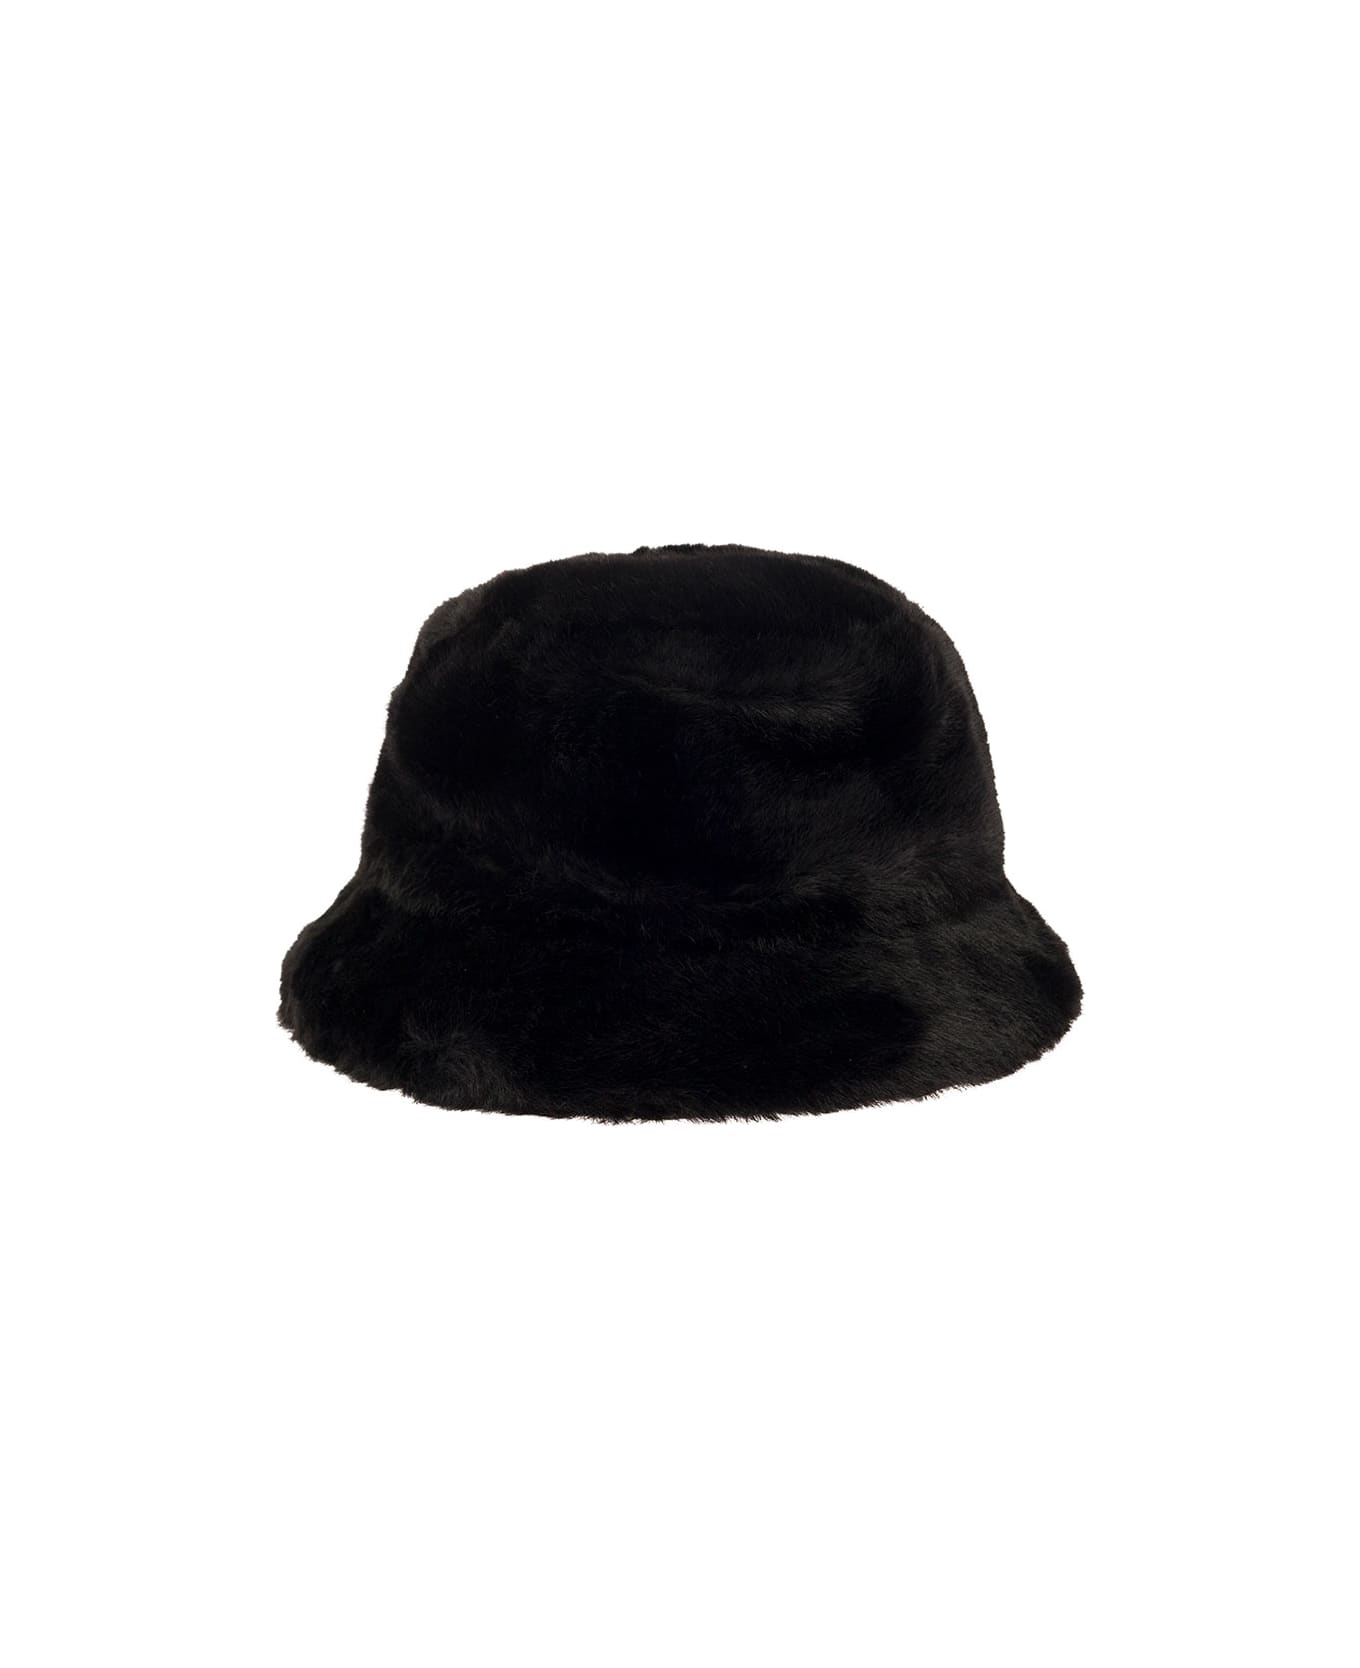 STAND STUDIO 'vera' Black Hat With Low Brim In Faux Fur Woman - Black